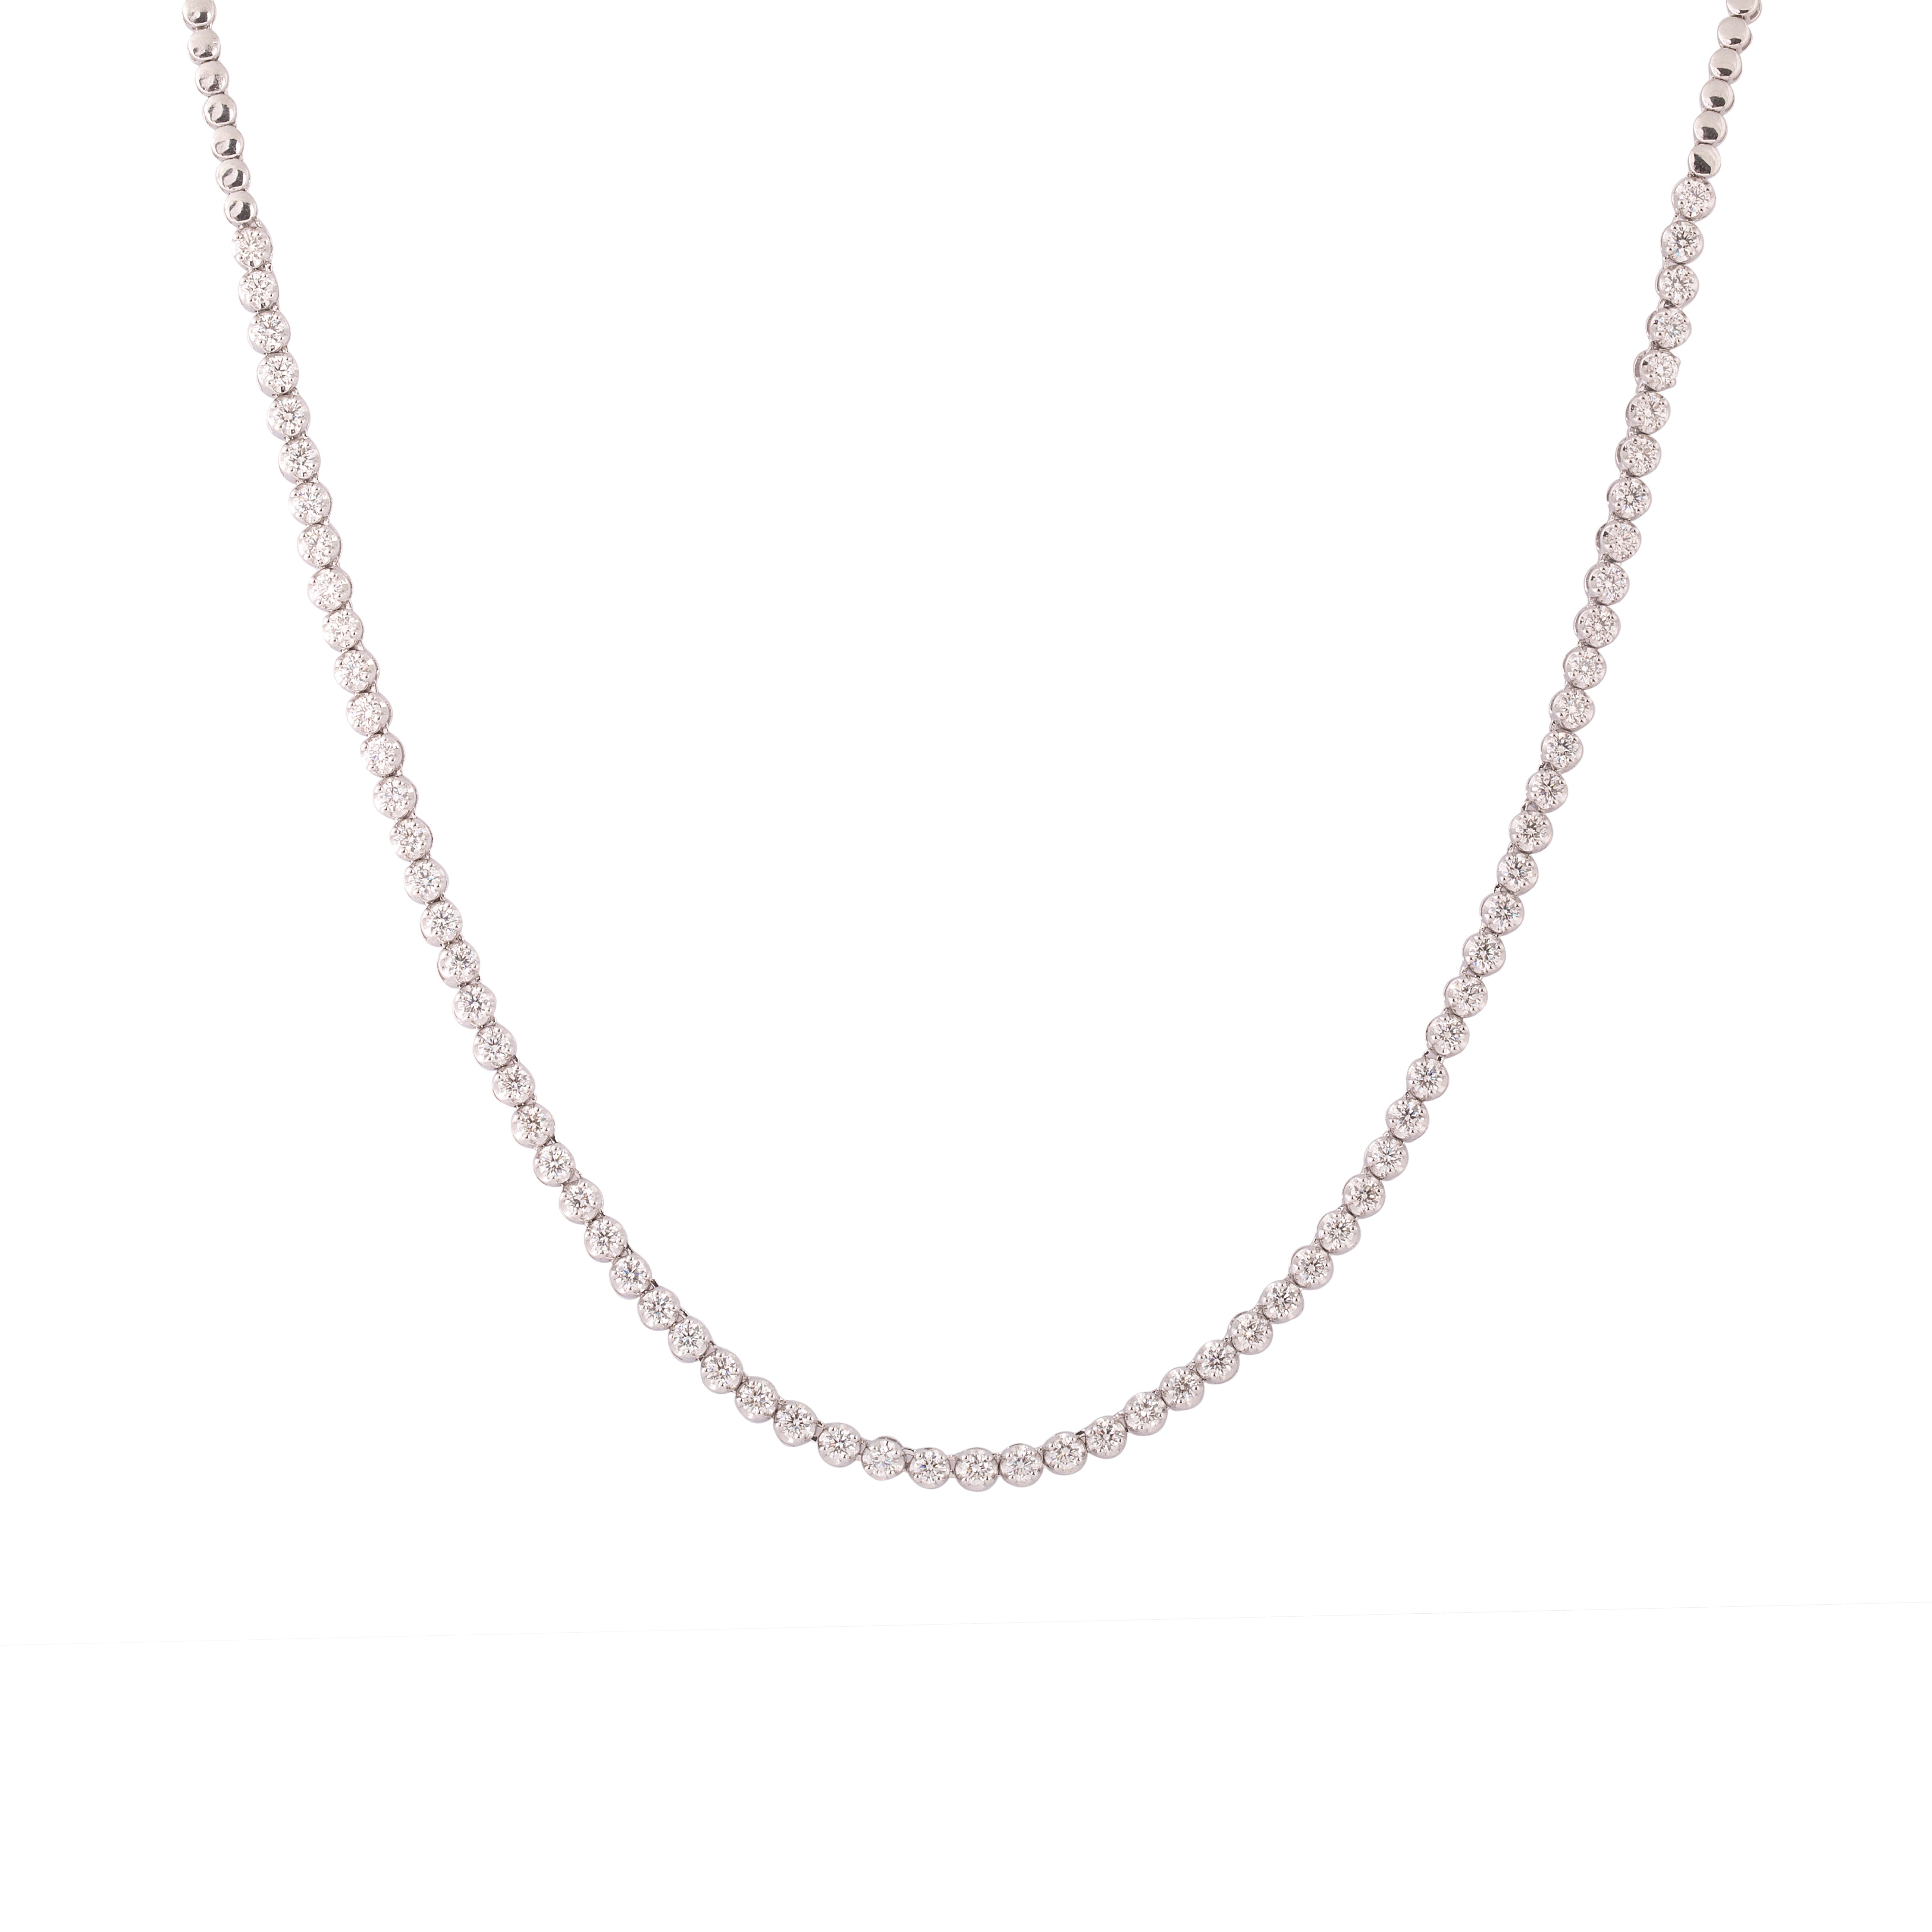 Certified 18K Gold 4.5ct Natural Diamond FG-VVS Wedding Tennis White Necklace